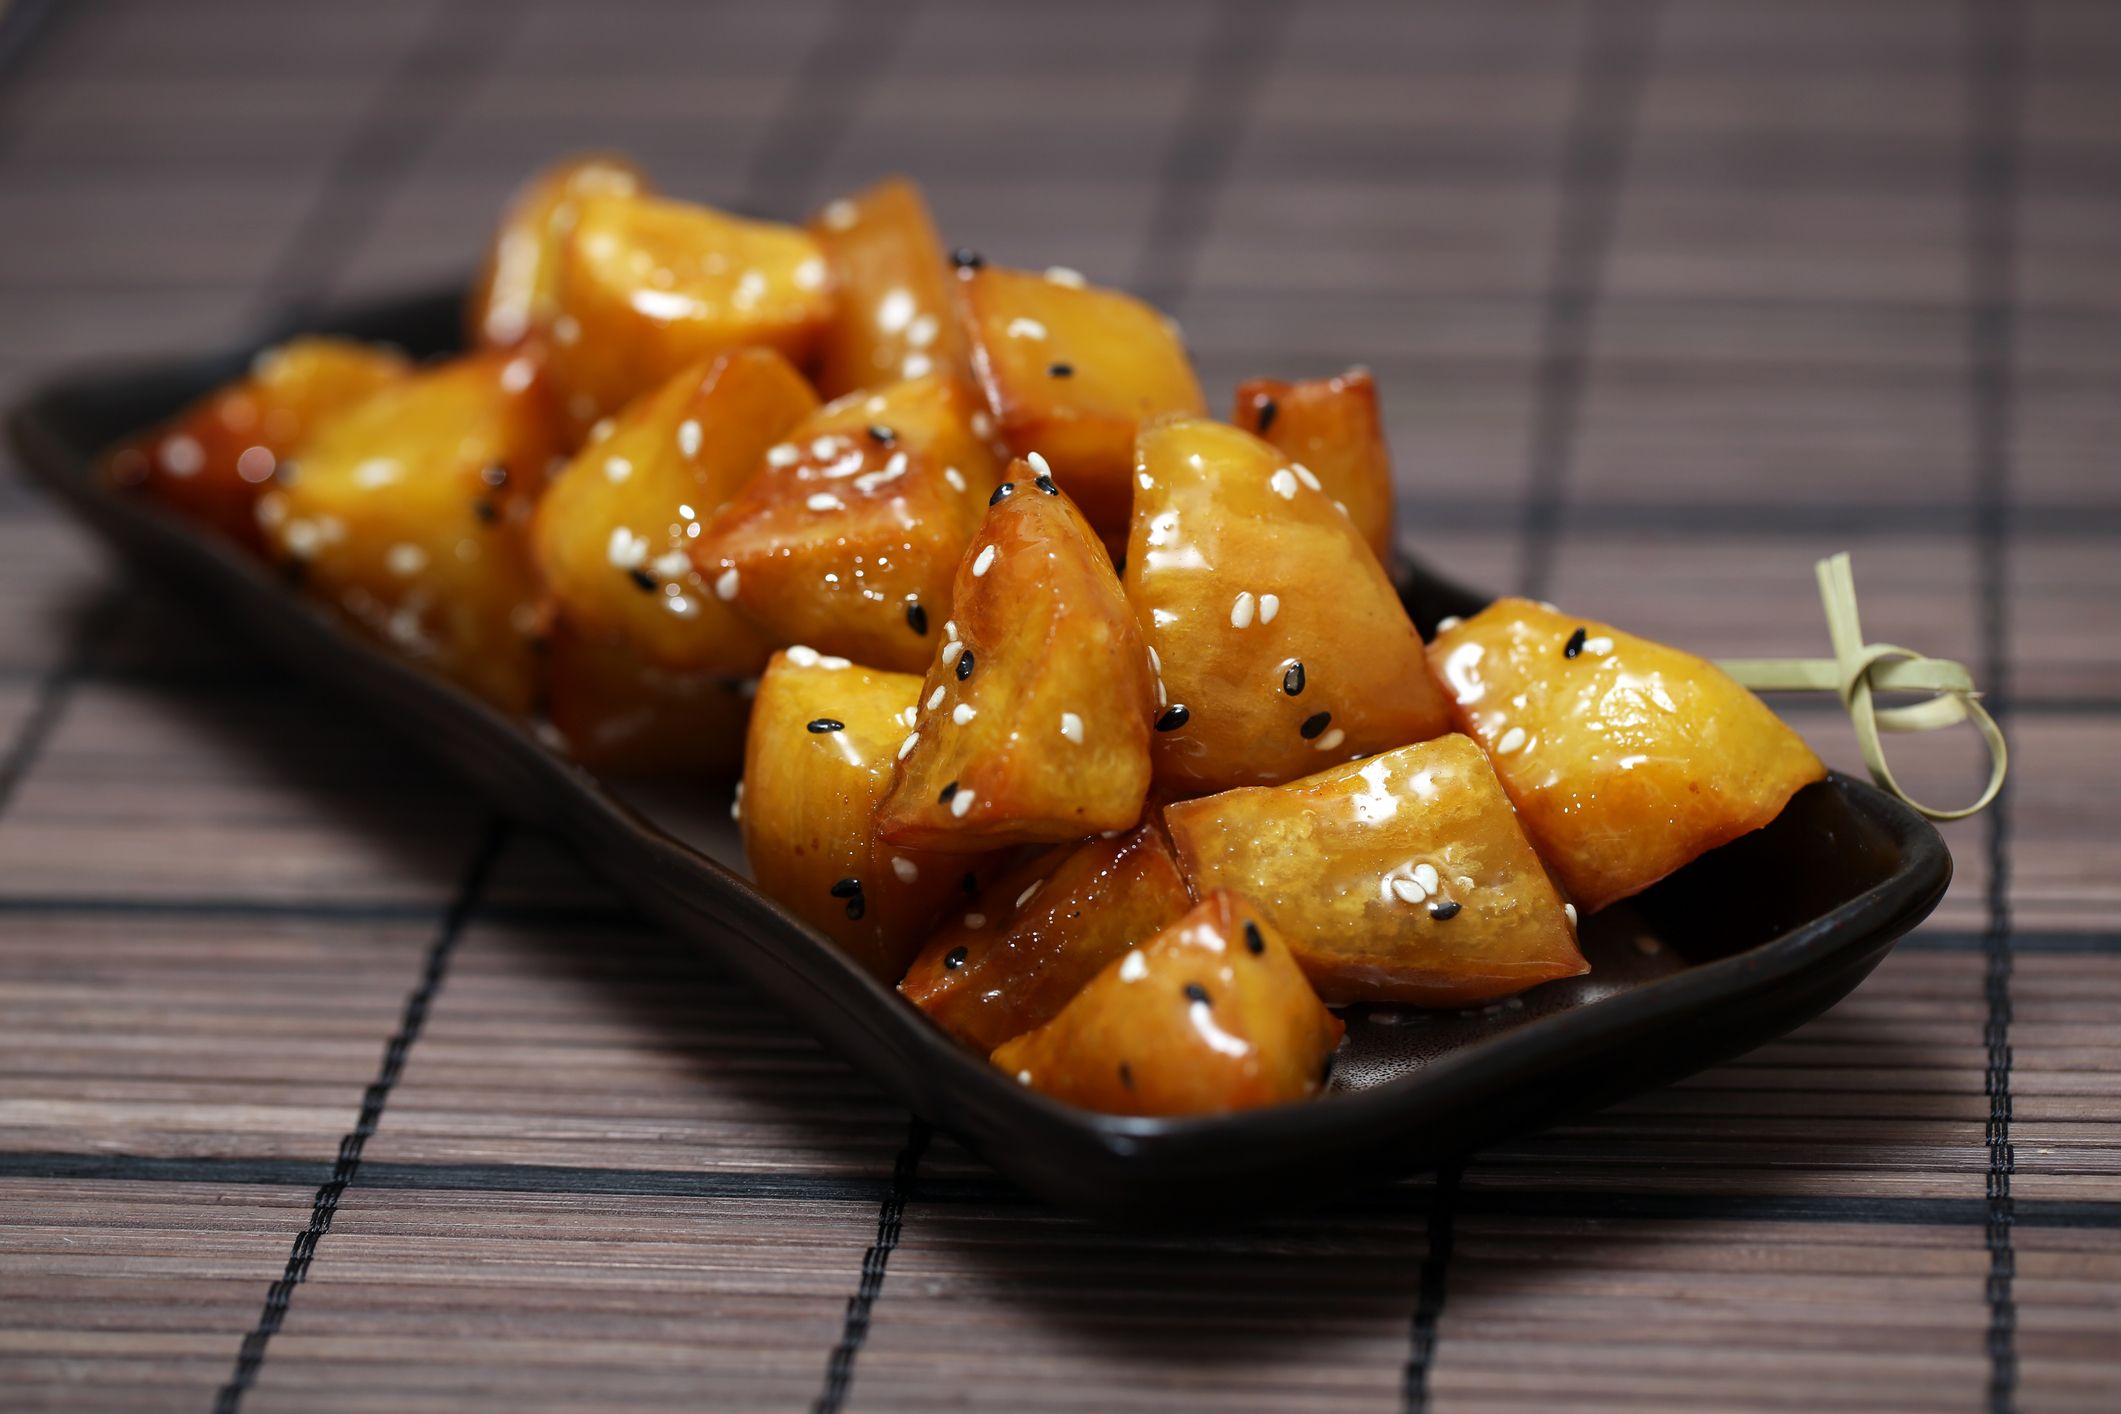 Candied Sweet Potato, Daigaku Imo, traditional Japanese food deep fried sweet potato coated with sweet syrup on the black plate